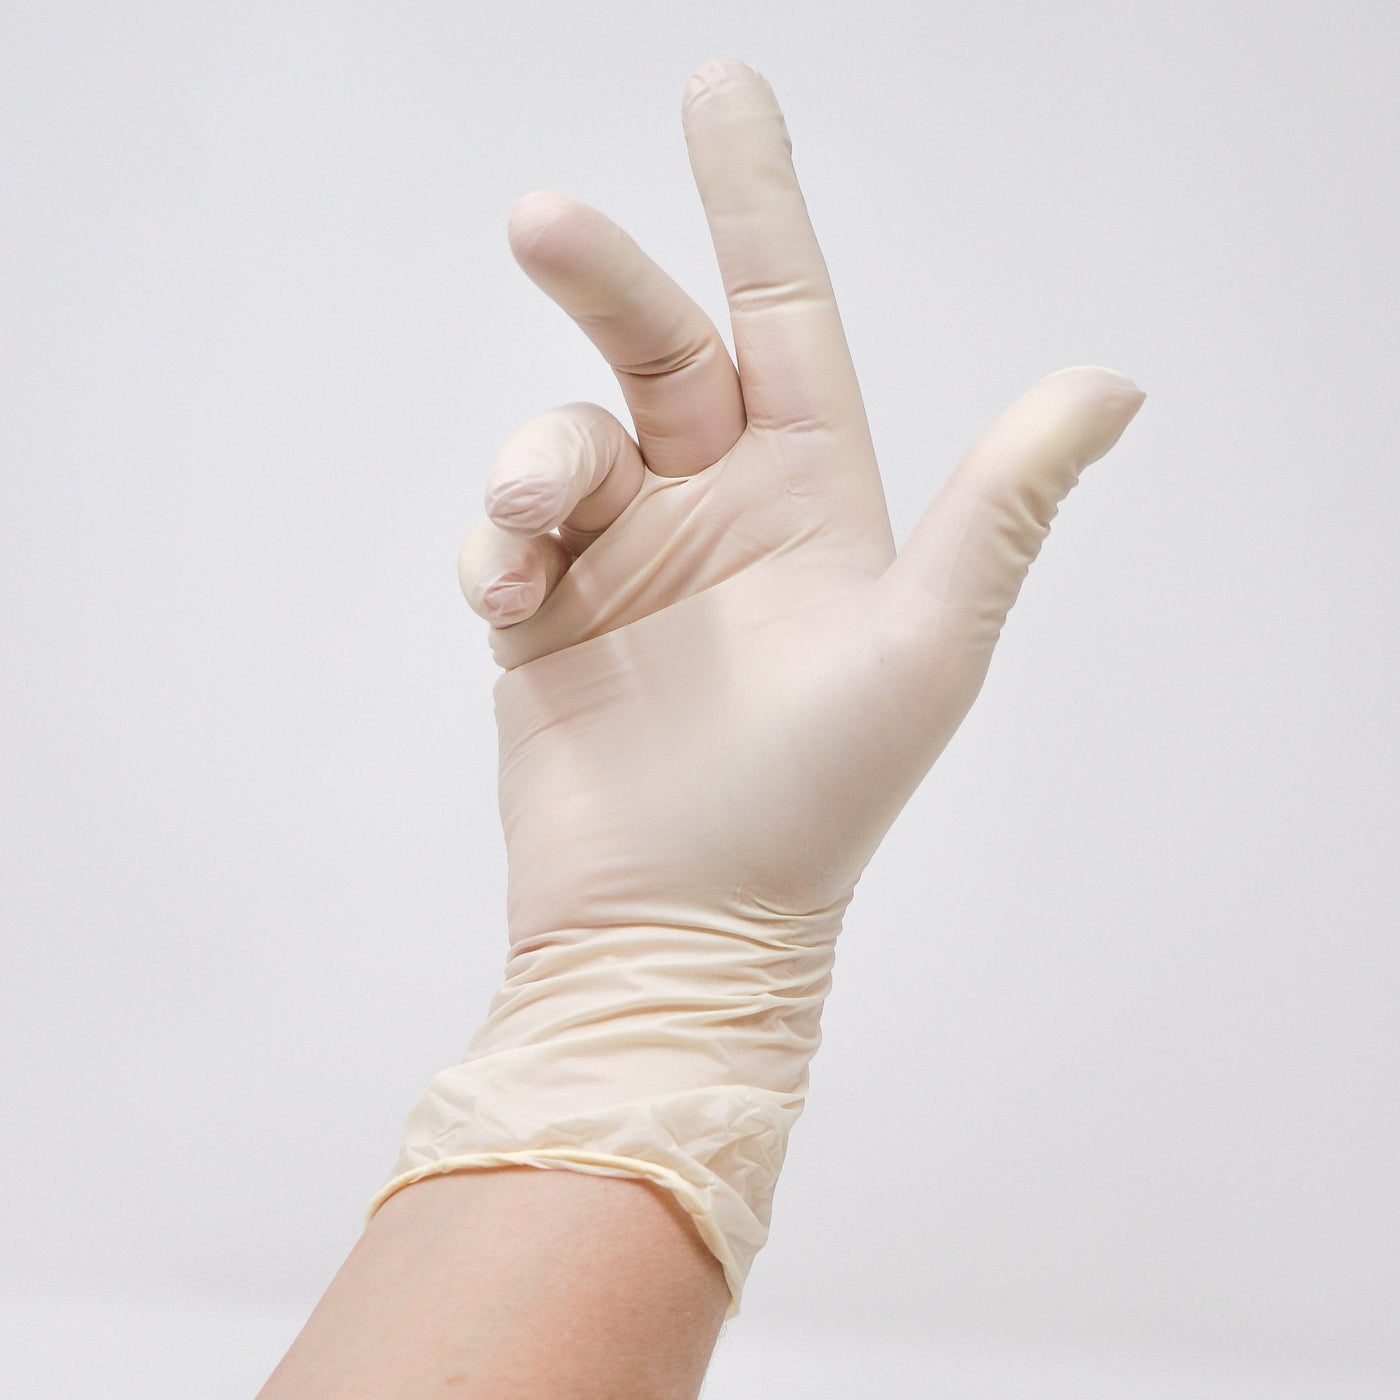 Sensicare Sterile Exam Gloves, Latex Free, Powder free - SINGLES